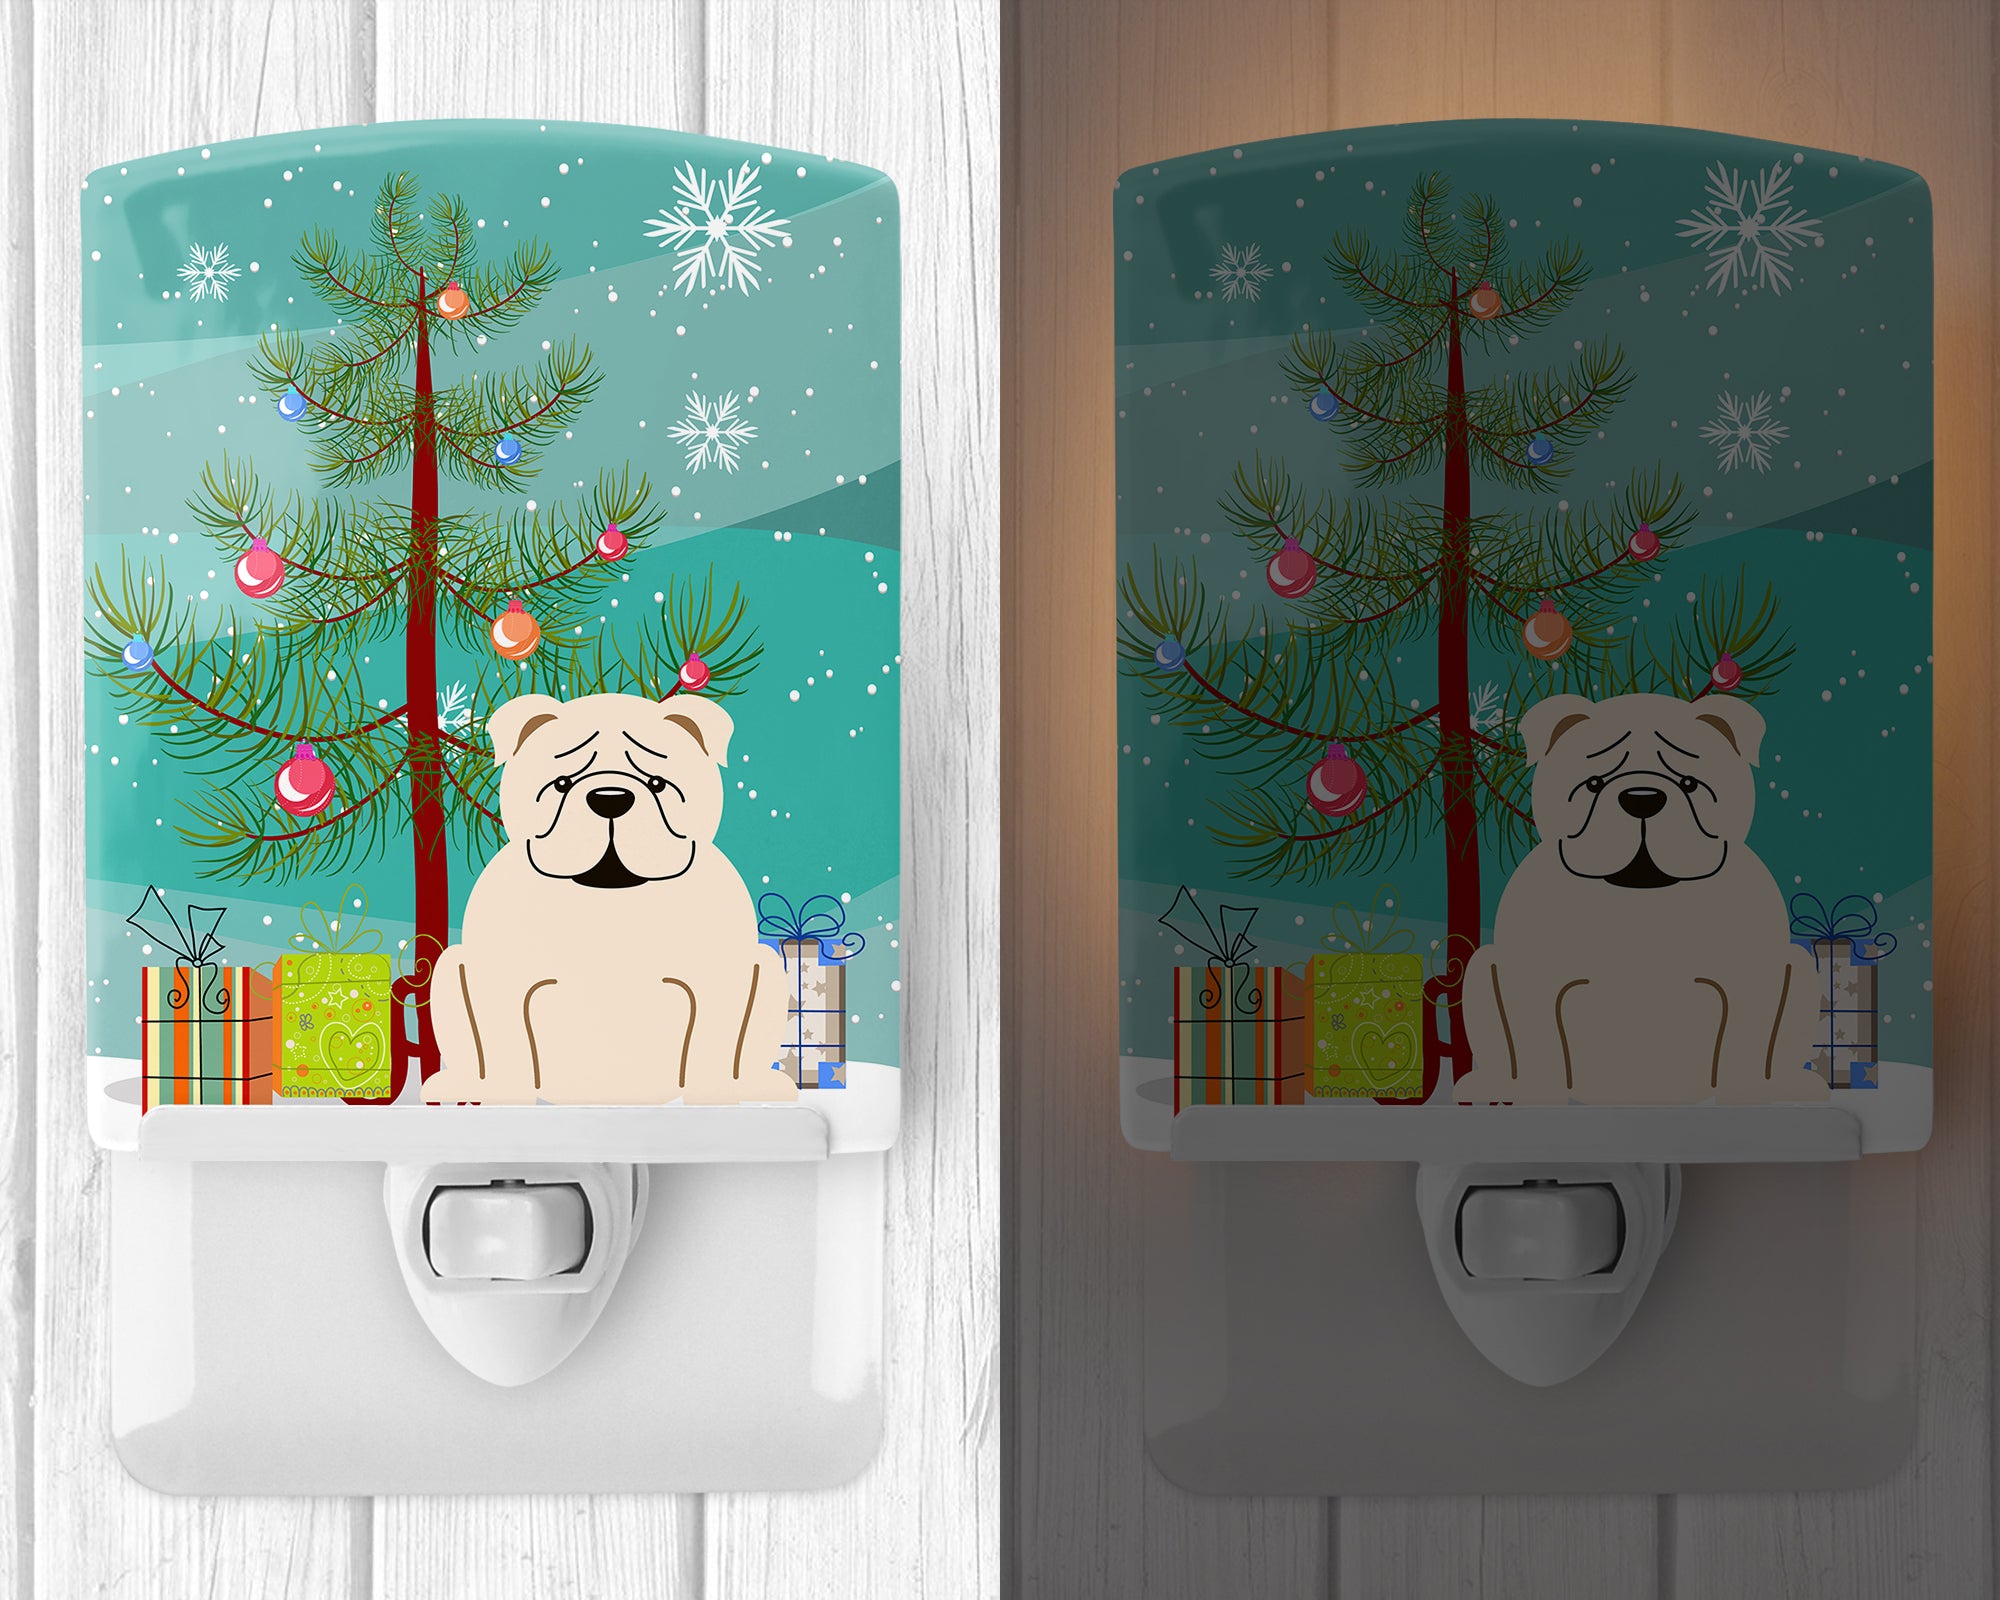 Merry Christmas Tree English Bulldog White Ceramic Night Light BB4248CNL - the-store.com